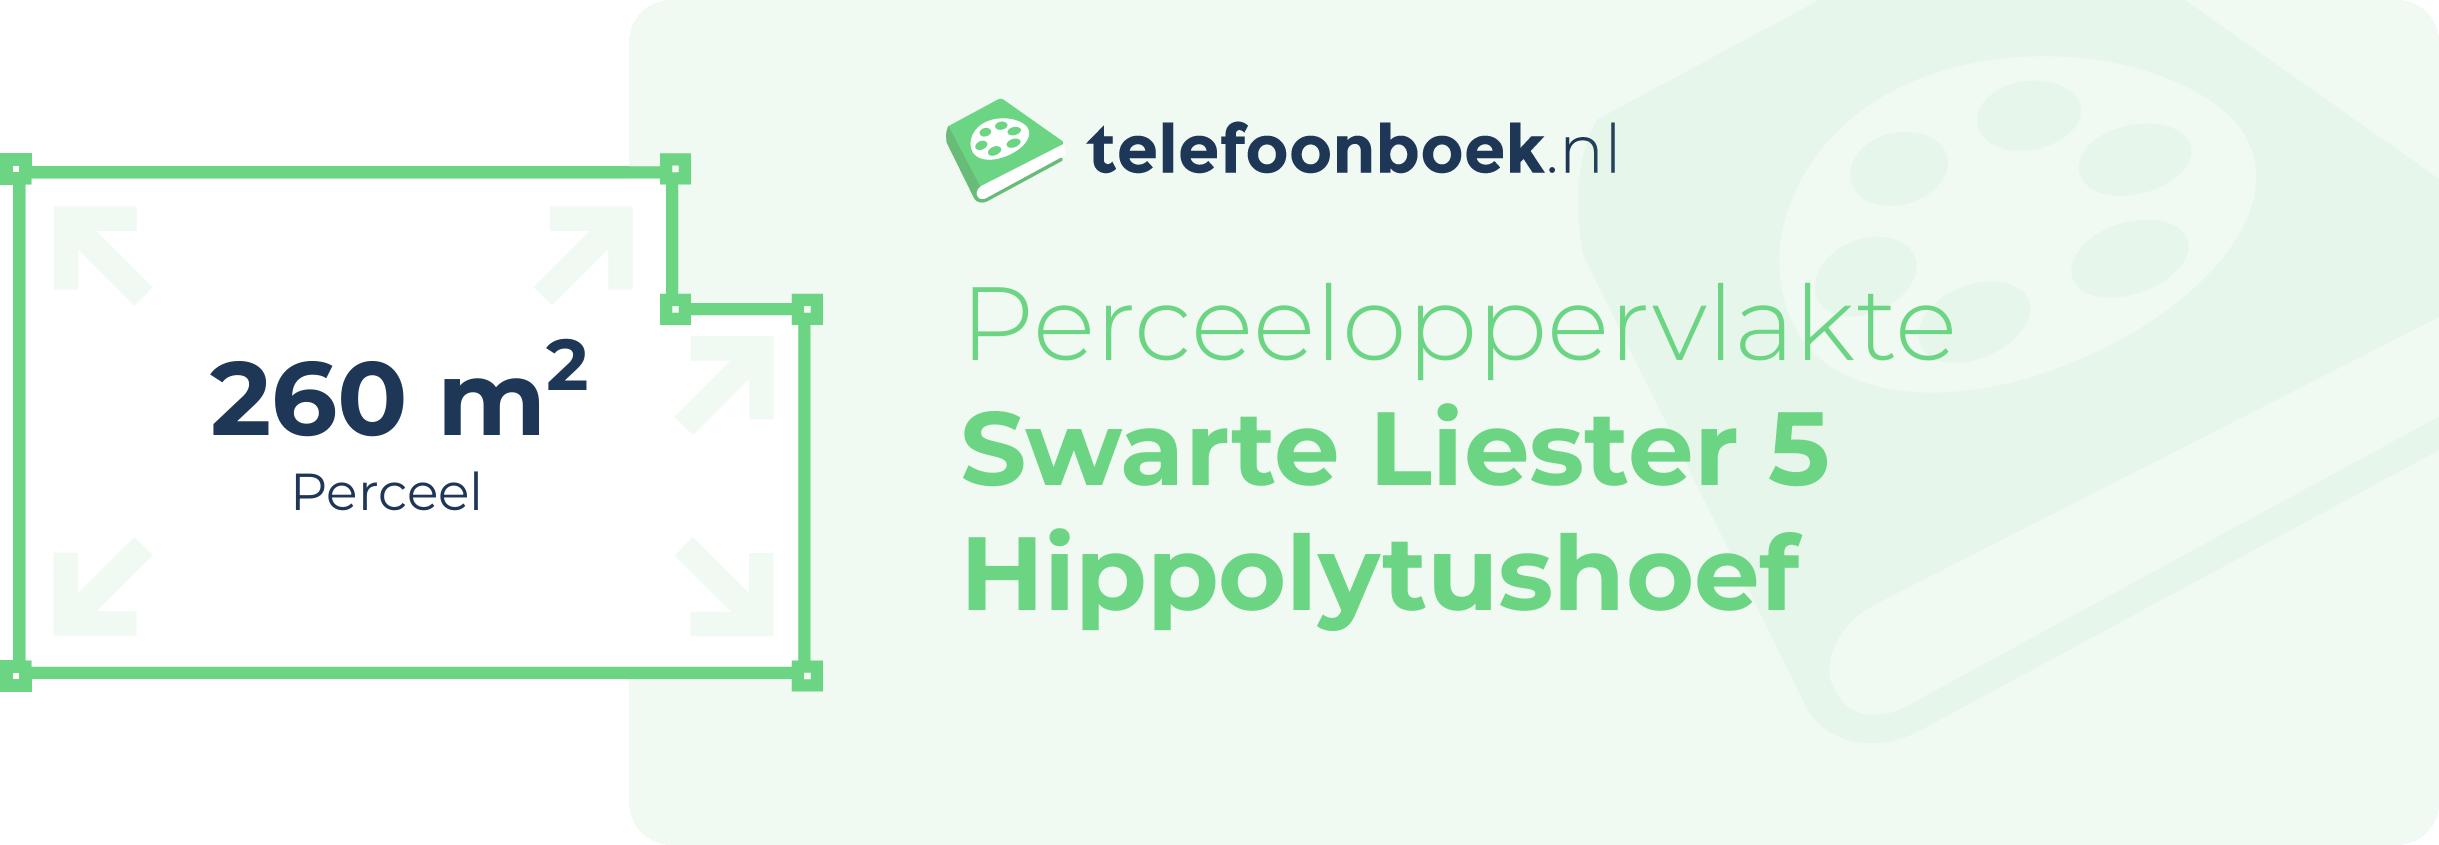 Perceeloppervlakte Swarte Liester 5 Hippolytushoef